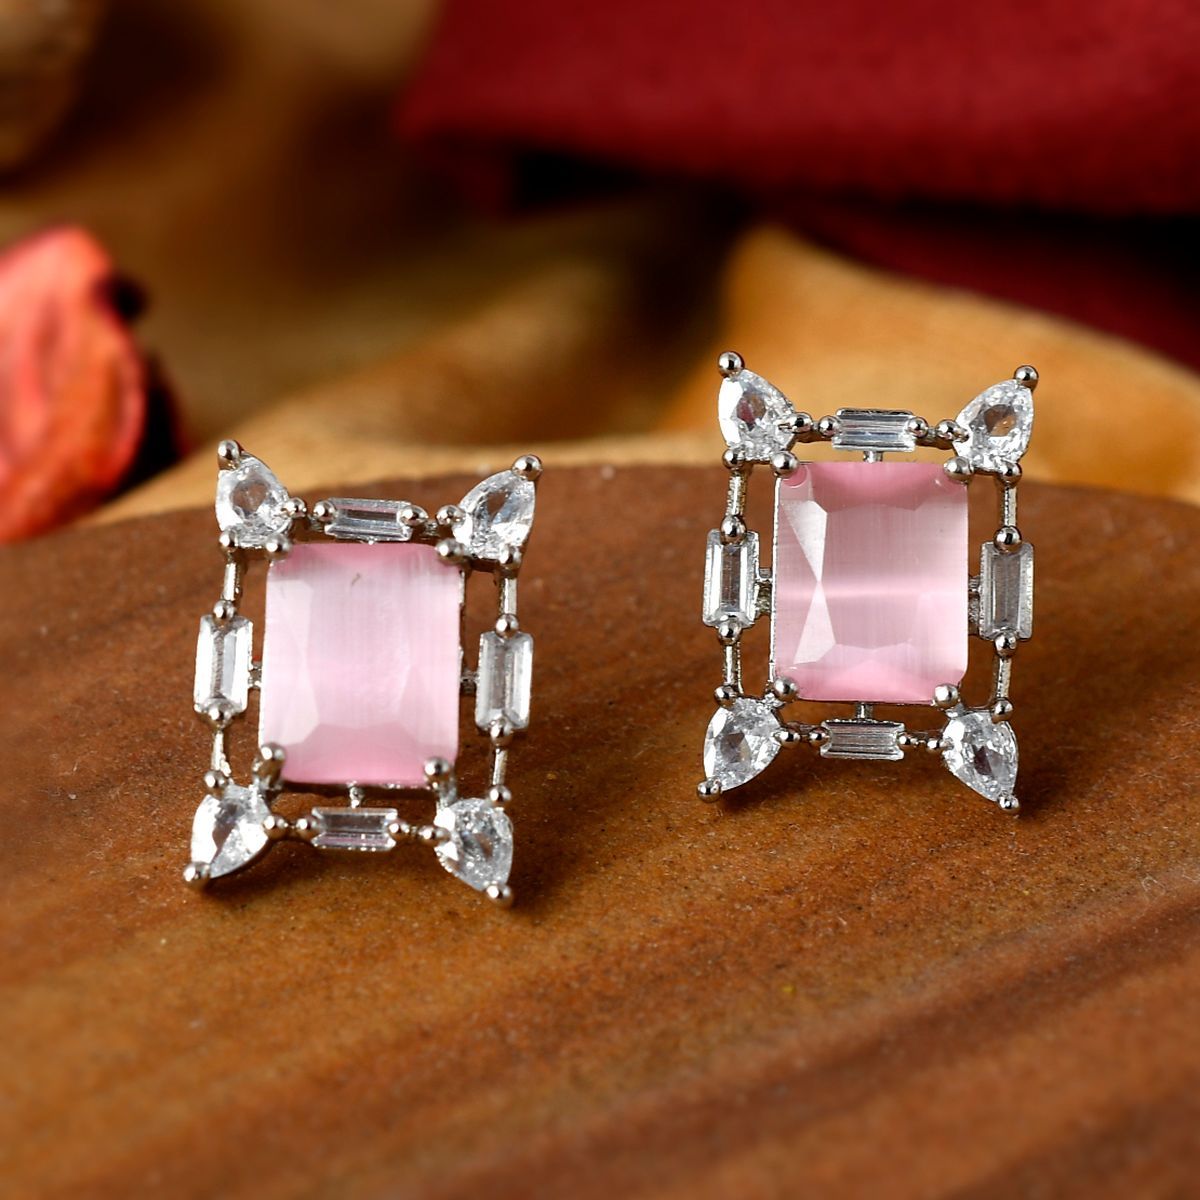 Details more than 80 real pink diamond earrings - 3tdesign.edu.vn